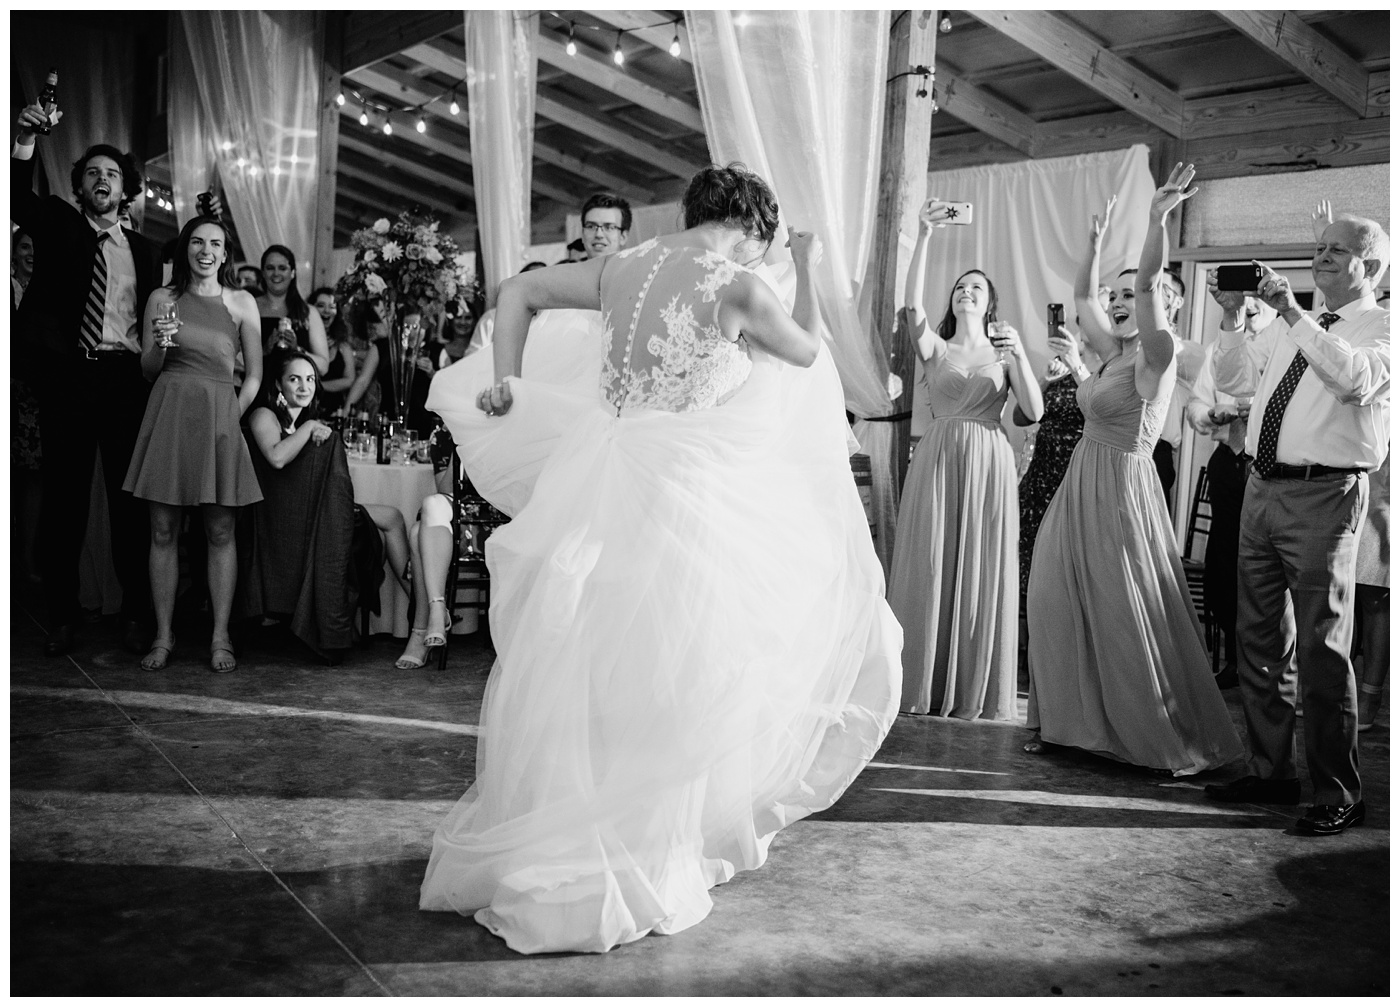 DelFosse Vineyard couple dancing during their reception